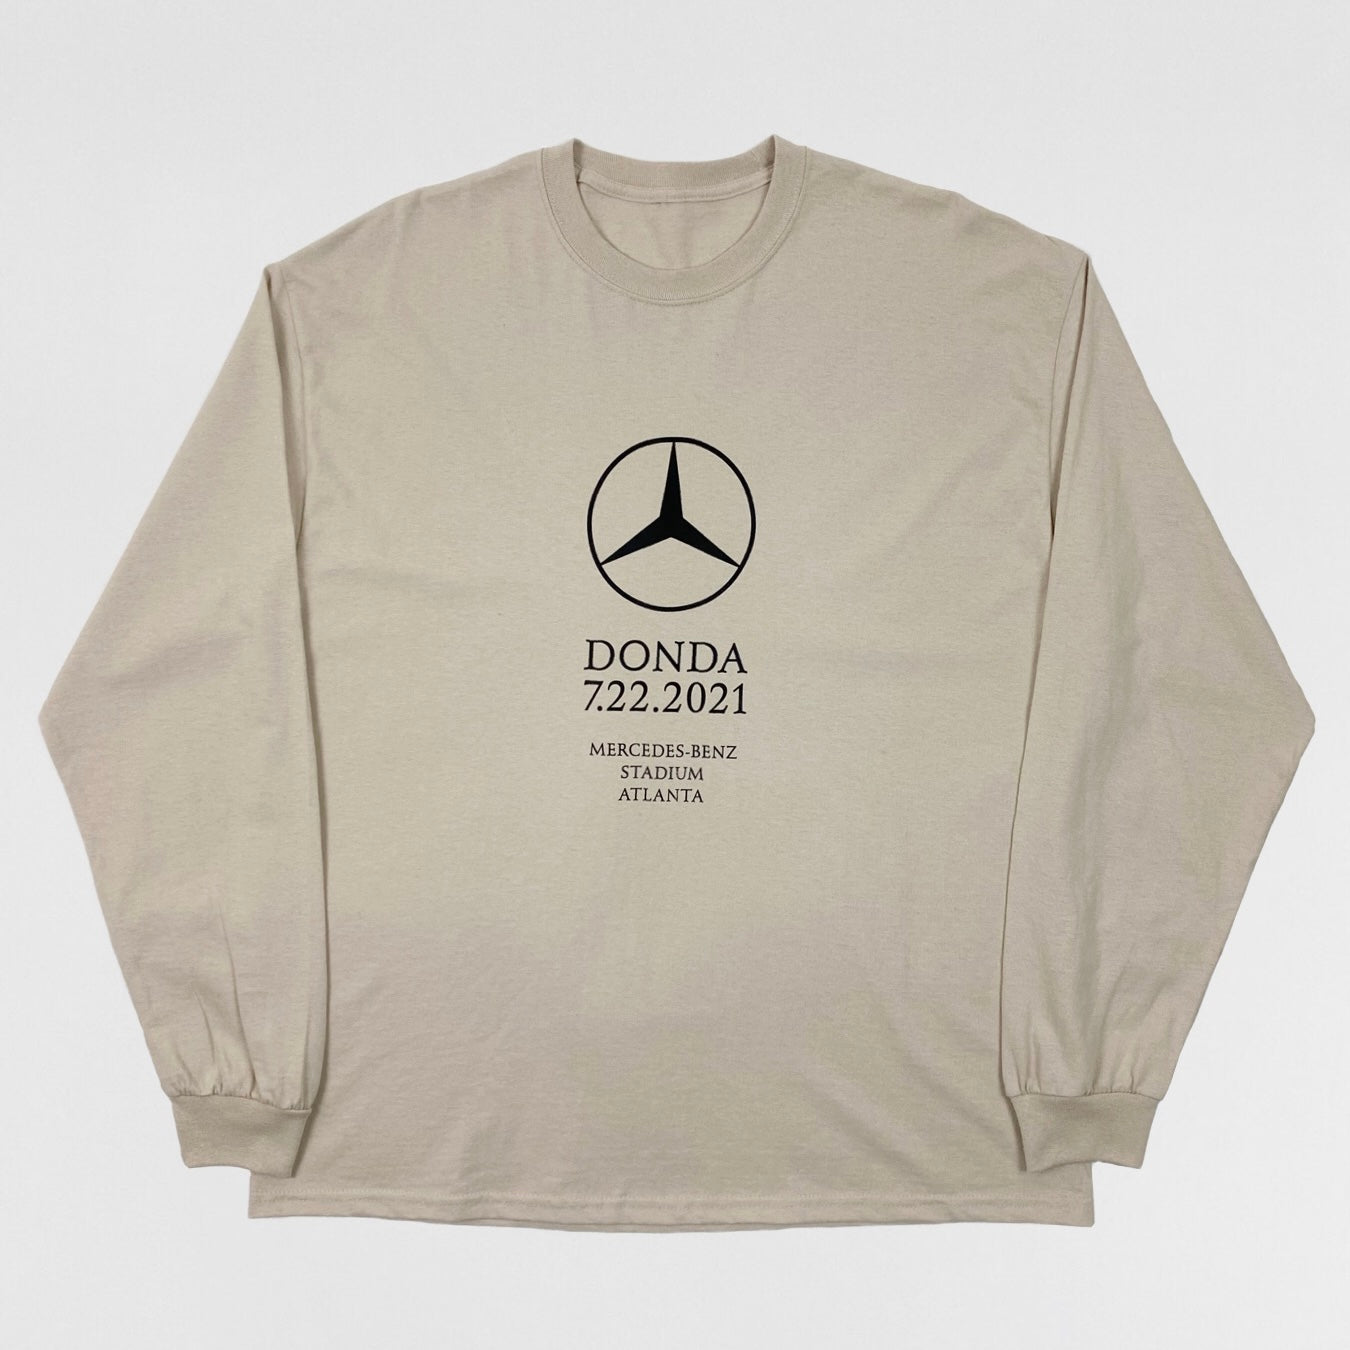 Donda 2021 Mercedes Benz LP Long Sleeve In Tan